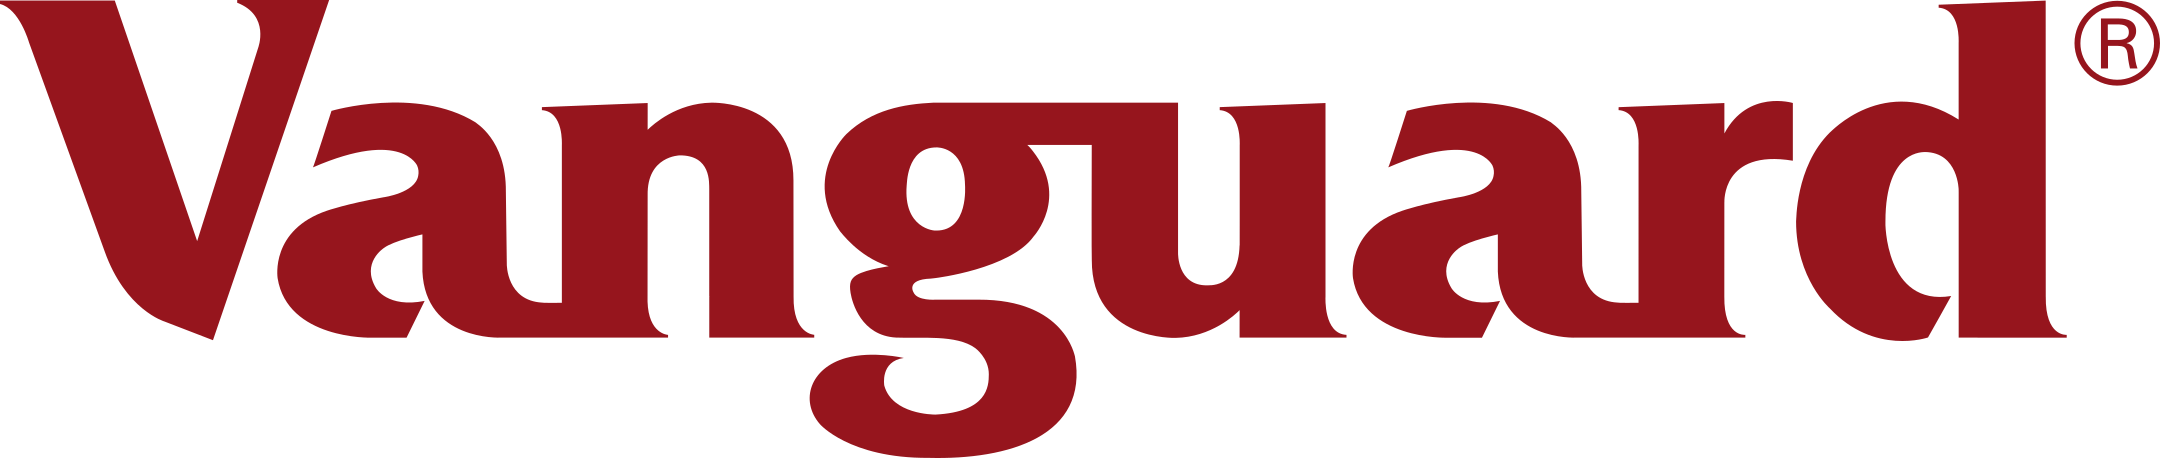 vanguard investiments logo 1 - Vanguard Group Logo